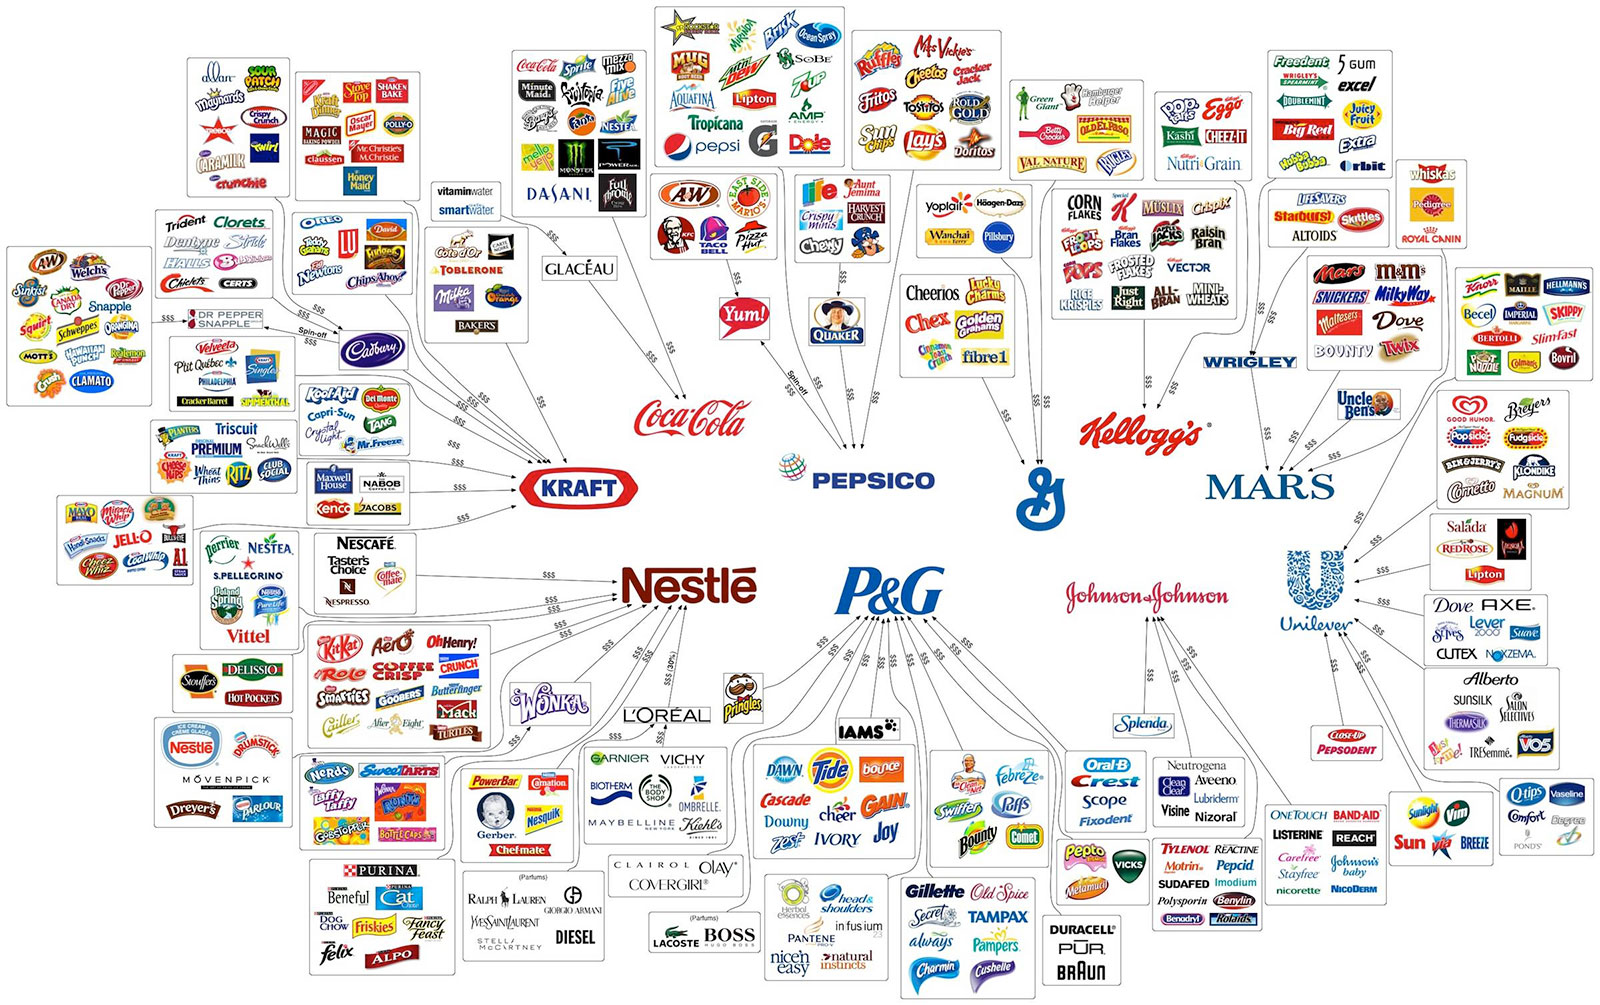 Food brand ownership